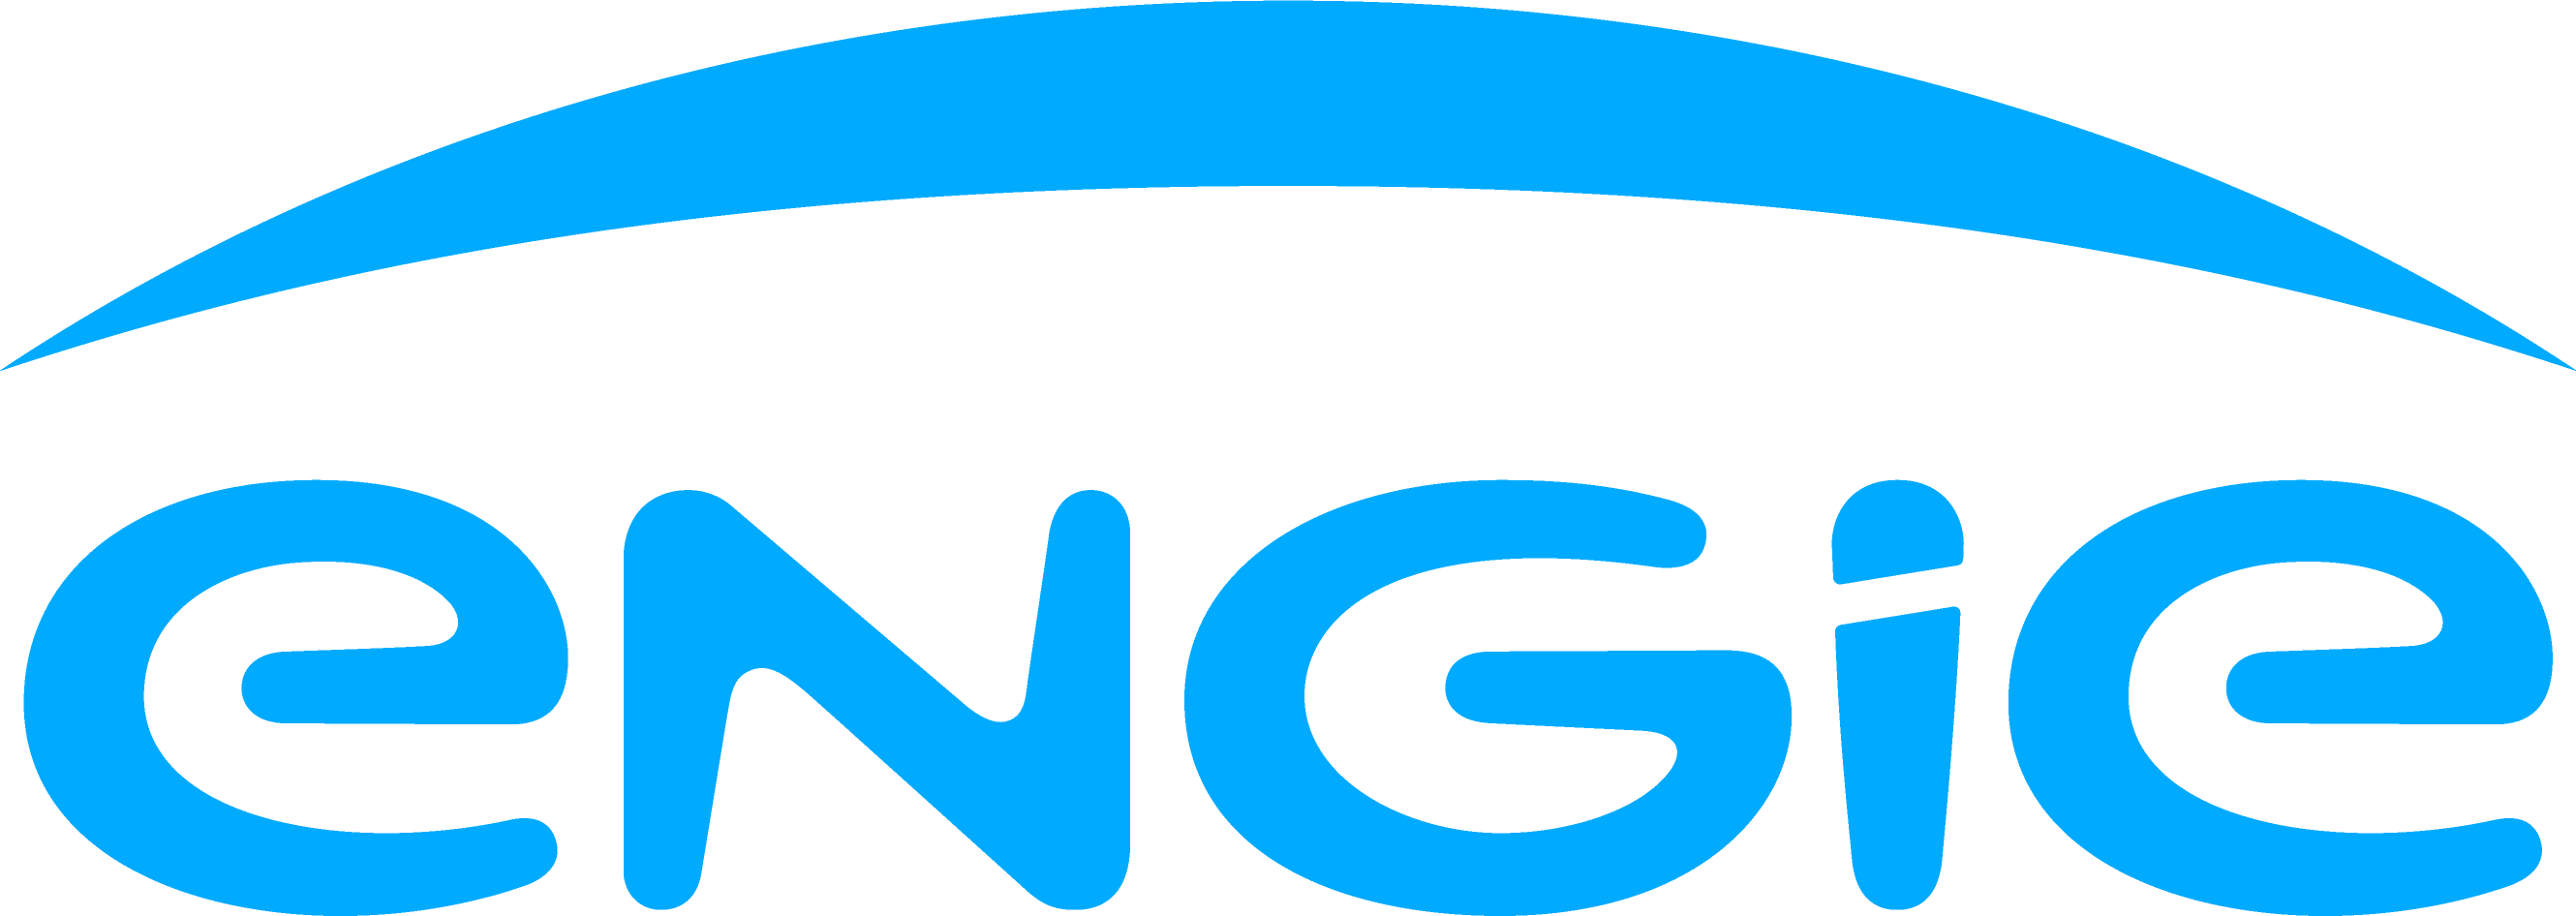 Engie’s logo